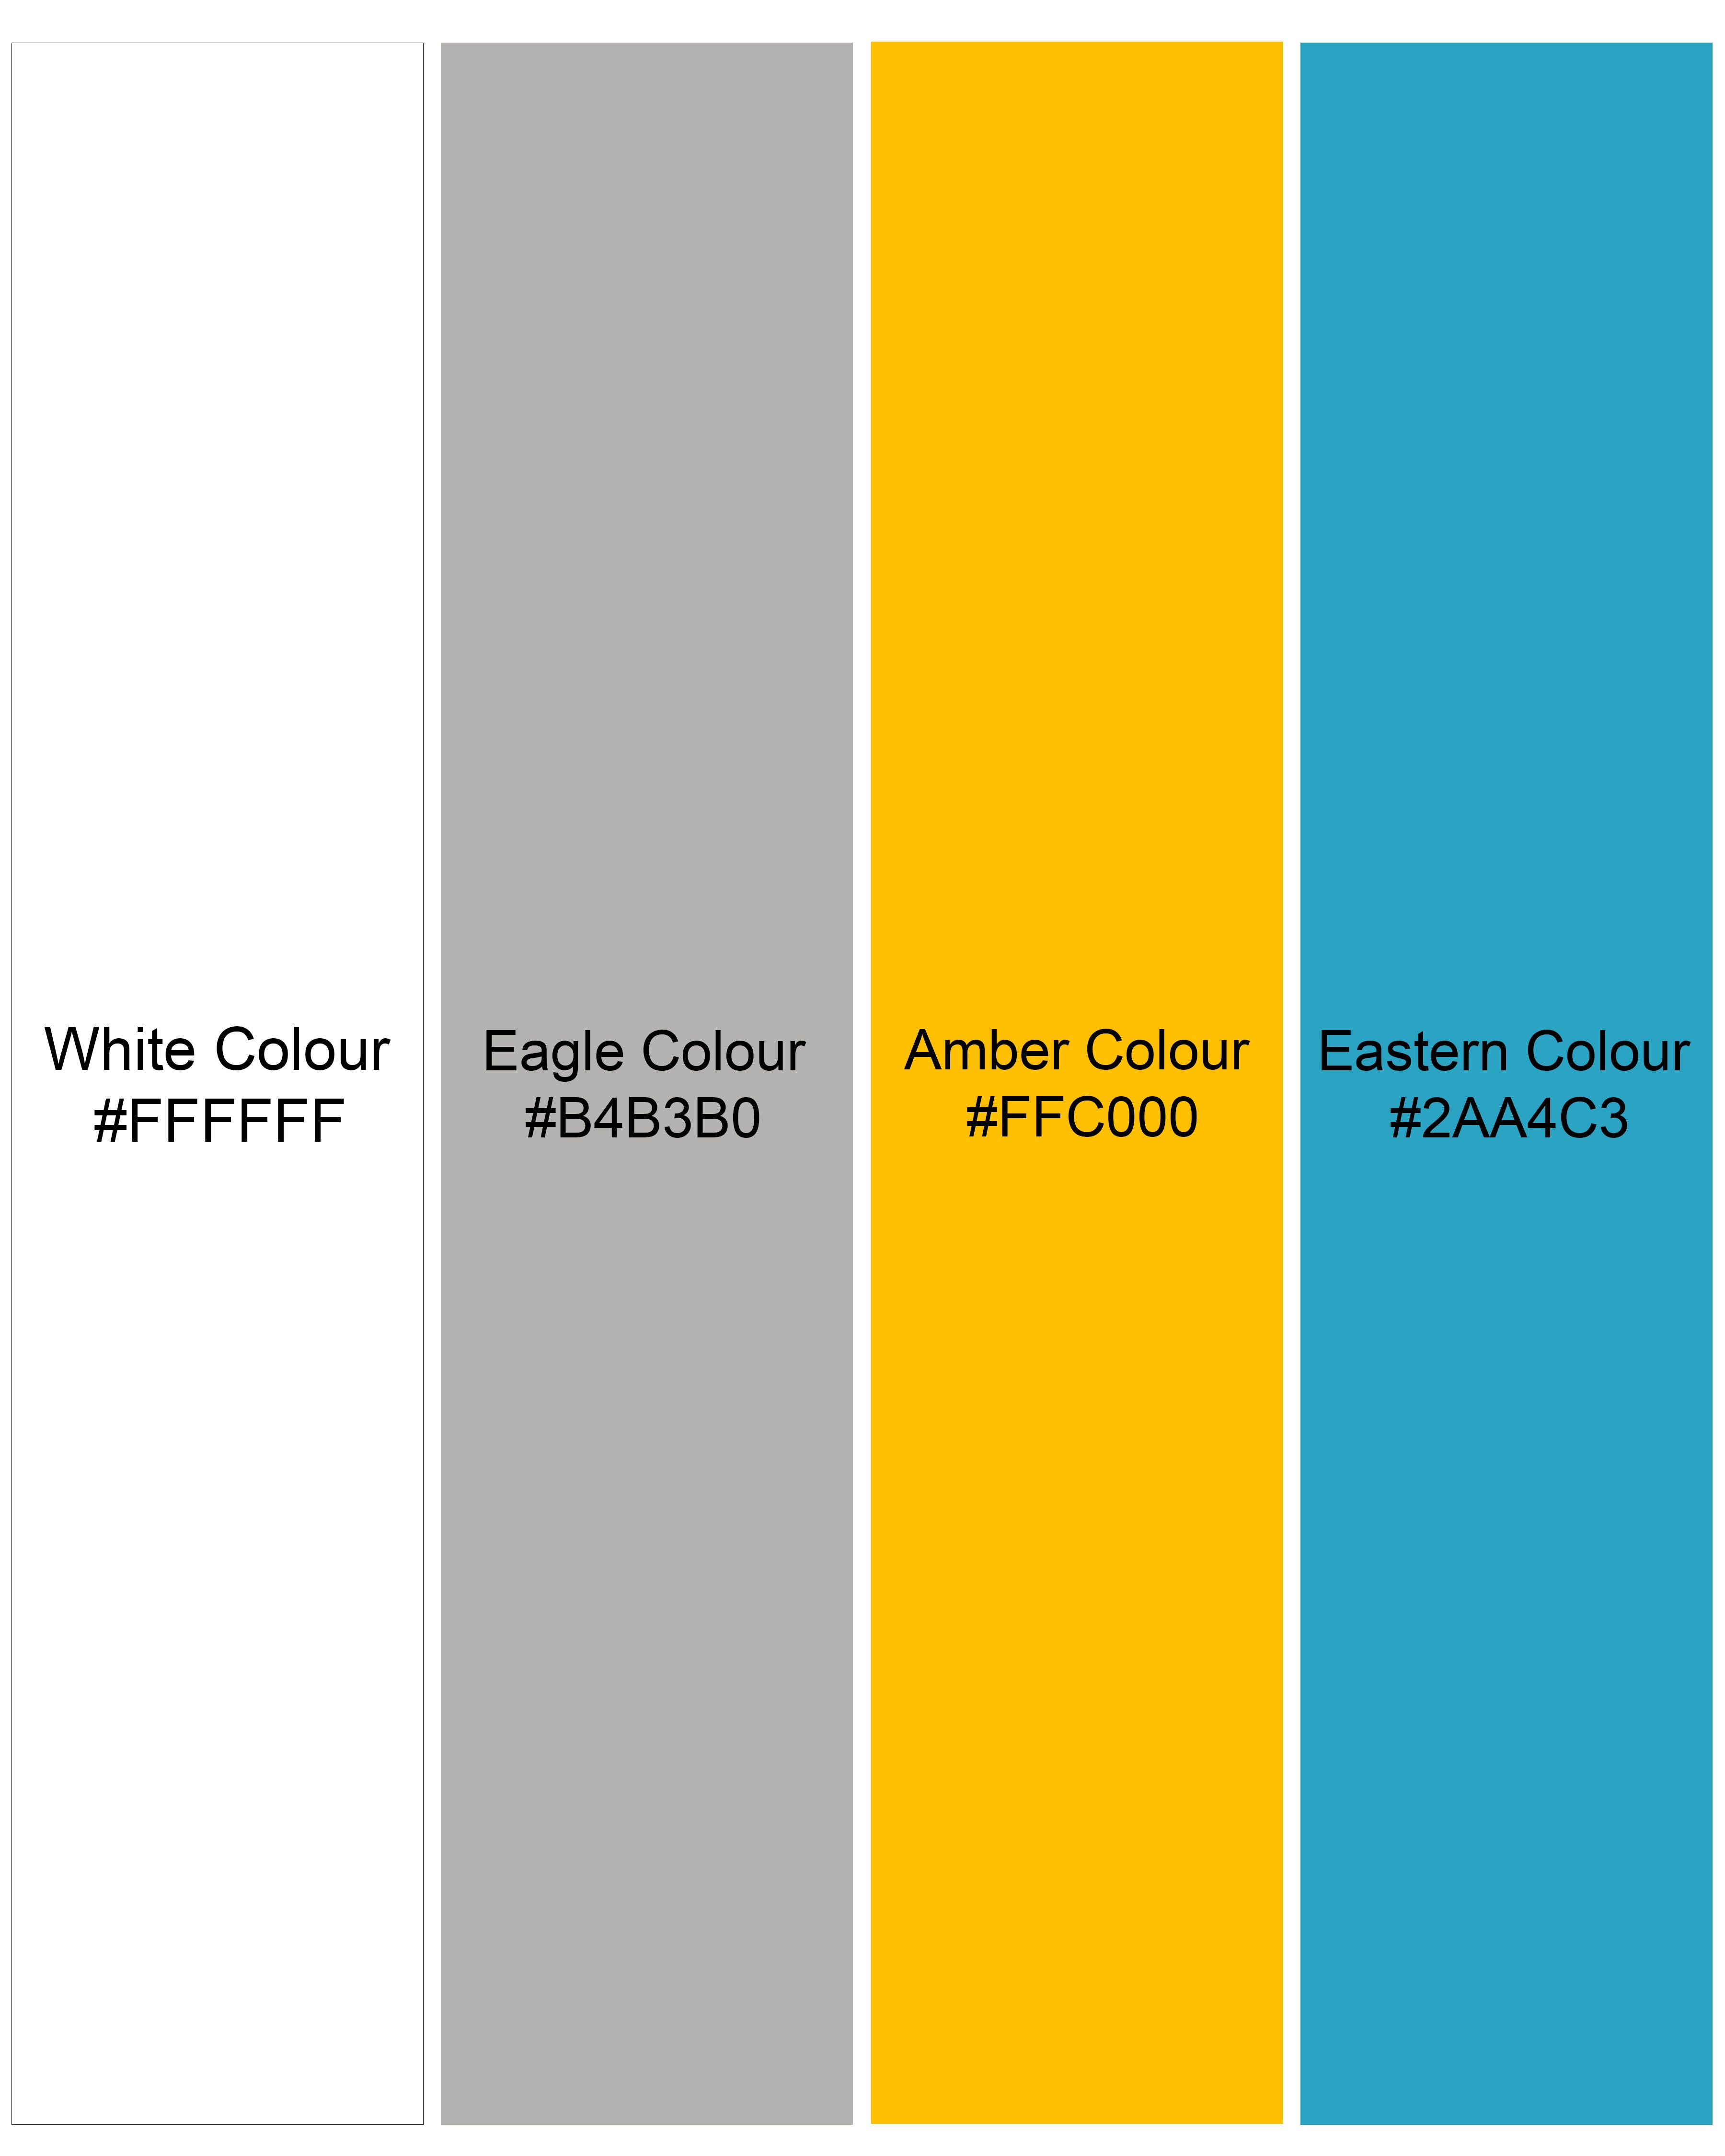 Eagle Gray and White Multicolour Printed Luxurious Linen Shirt 9870-CC-BLK-SS-38, 9870-CC-BLK-SS-39, 9870-CC-BLK-SS-40, 9870-CC-BLK-SS-42, 9870-CC-BLK-SS-44, 9870-CC-BLK-SS-46, 9870-CC-BLK-SS-48, 9870-CC-BLK-SS-50, 9870-CC-BLK-SS-52